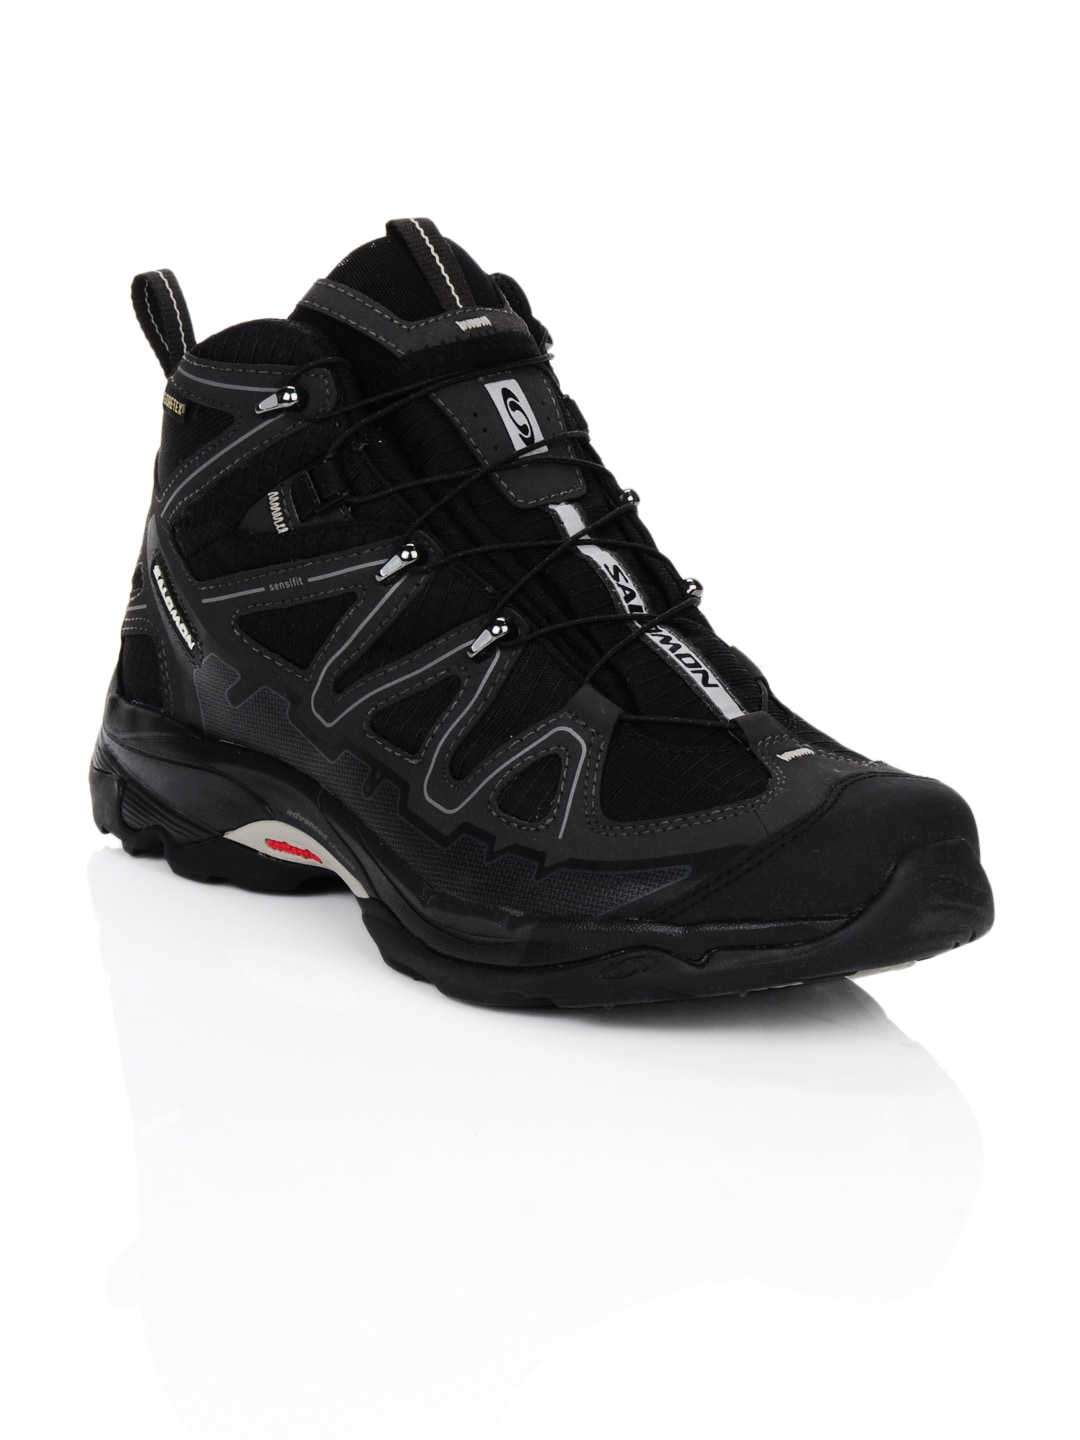 Salomon Men X-Tracks GTX Black Sports Shoes